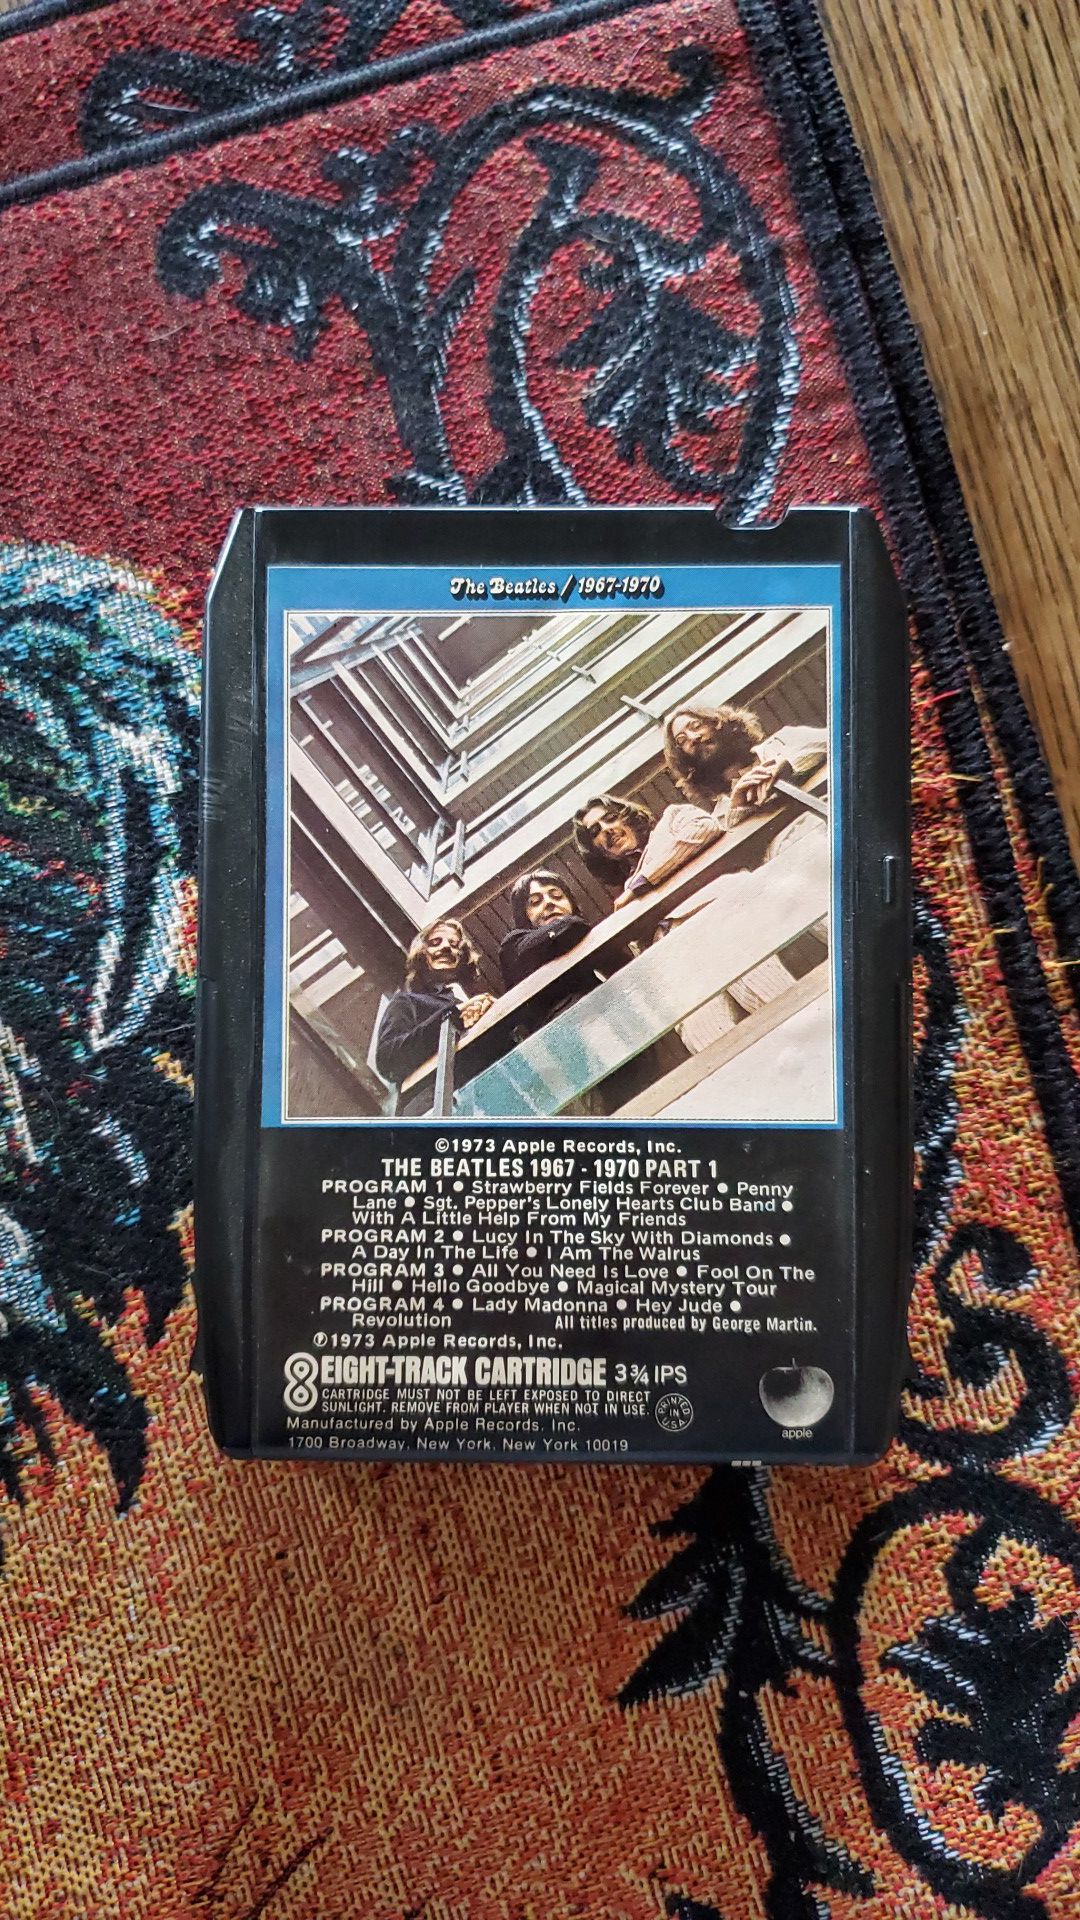 The Beatles 1967-1970 Eight-Track Cartridge